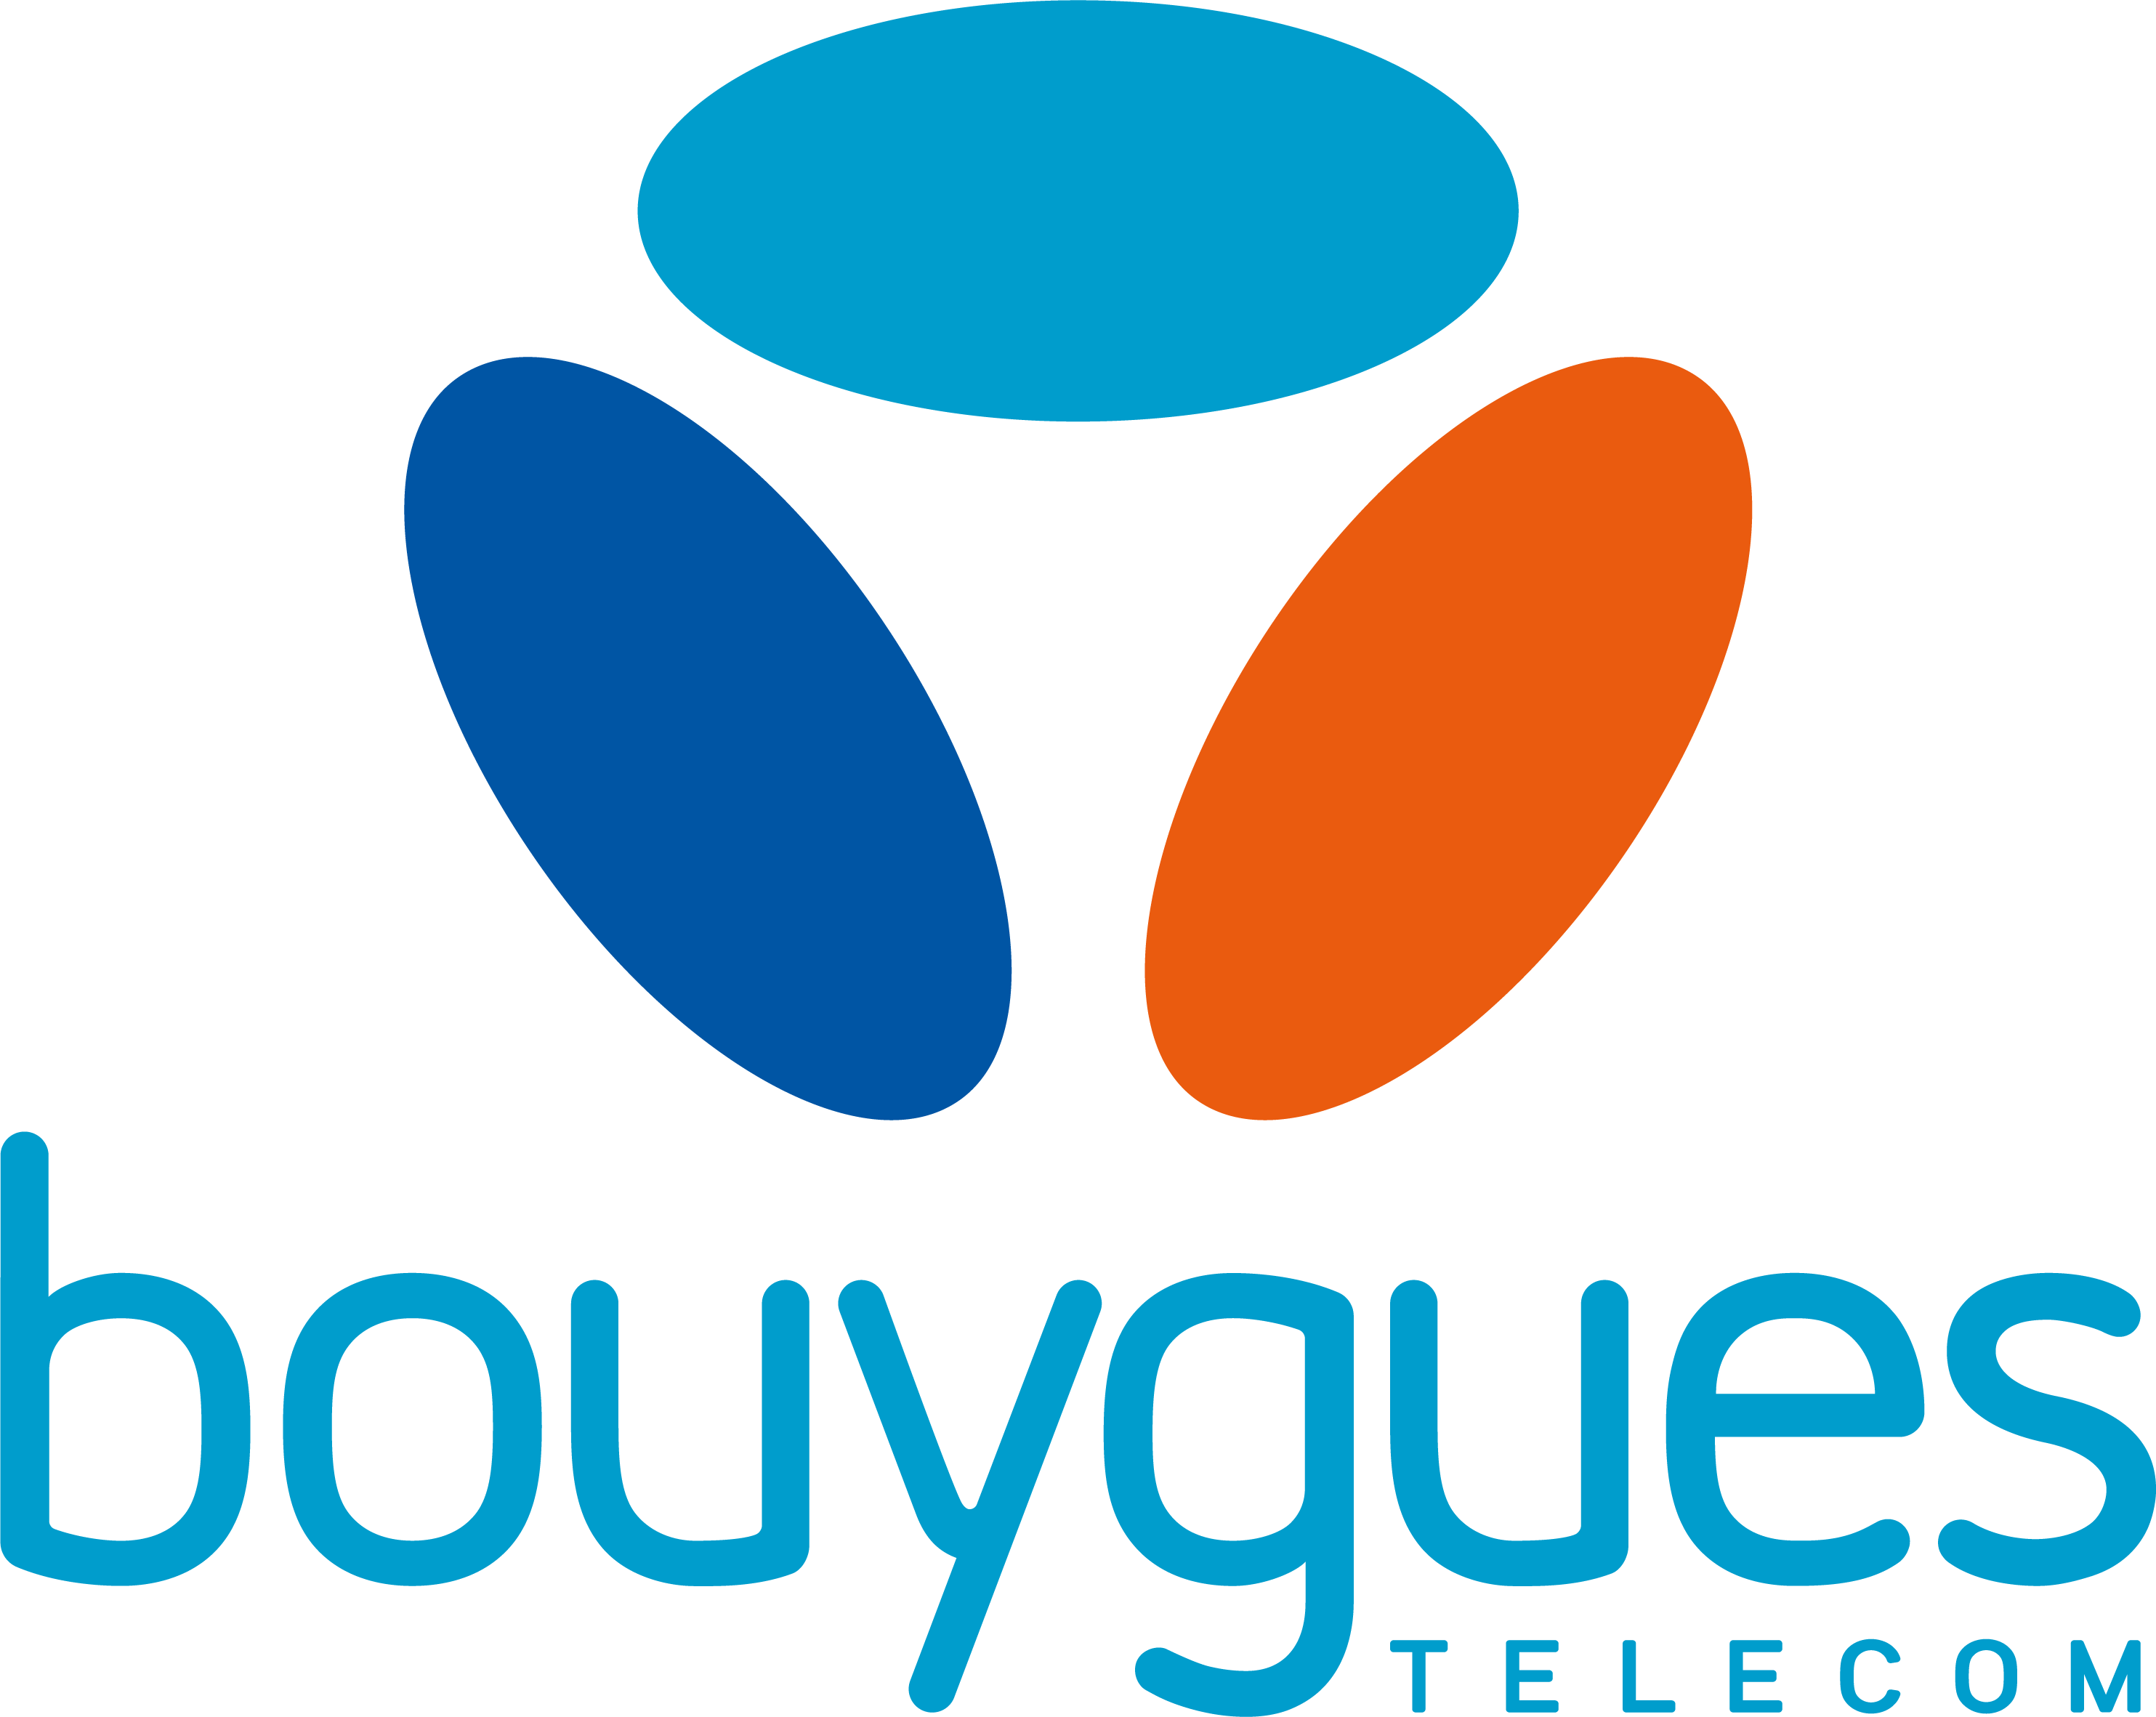 Le logo de BOUYGUES TELECOM